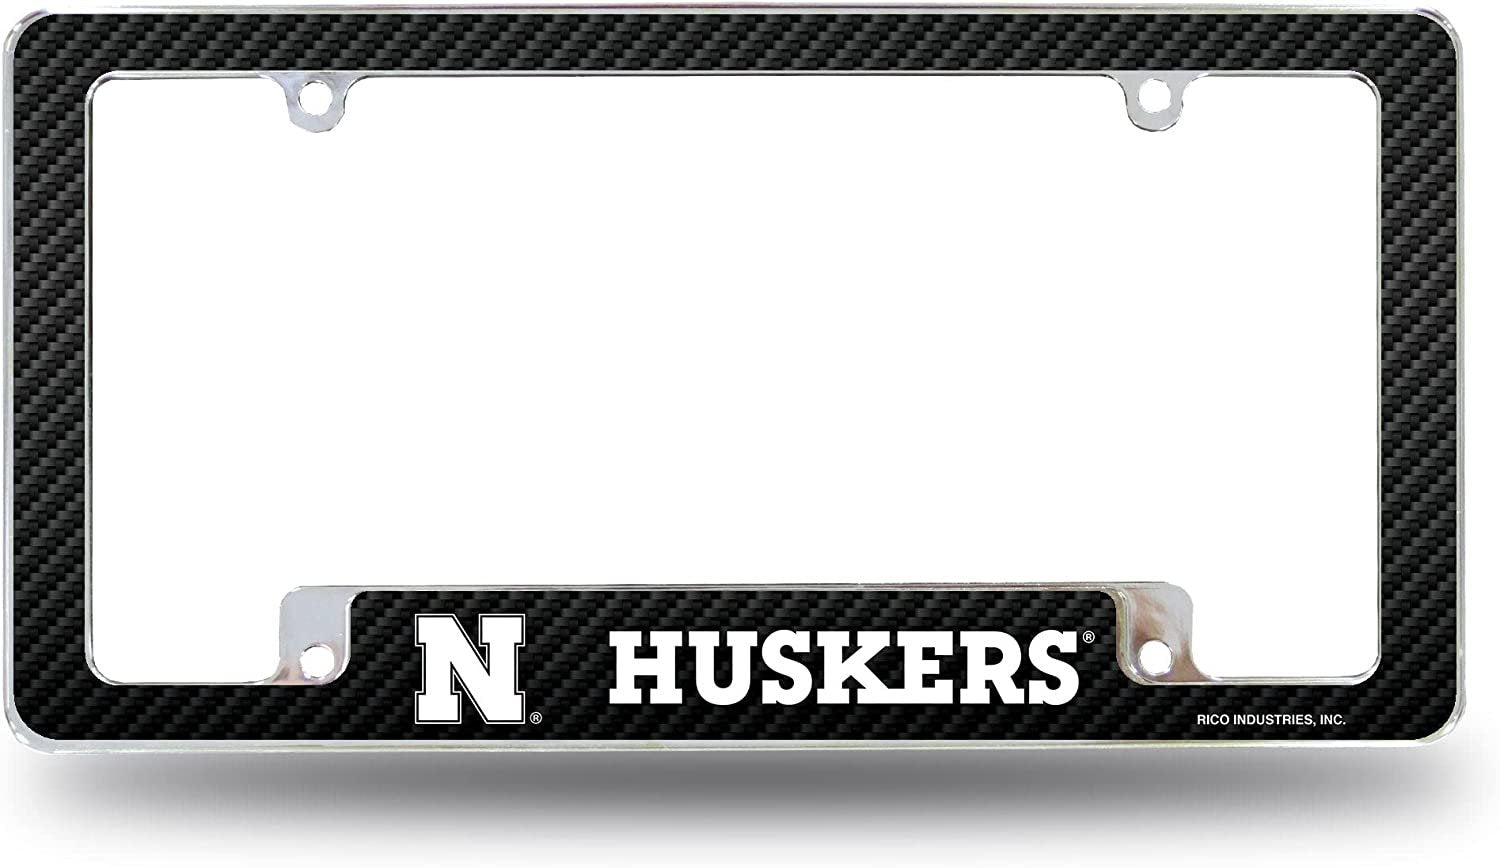 University of Nebraska Cornhuskers Metal License Plate Frame Chrome Tag Cover Carbon Fiber Design 6x12 Inch